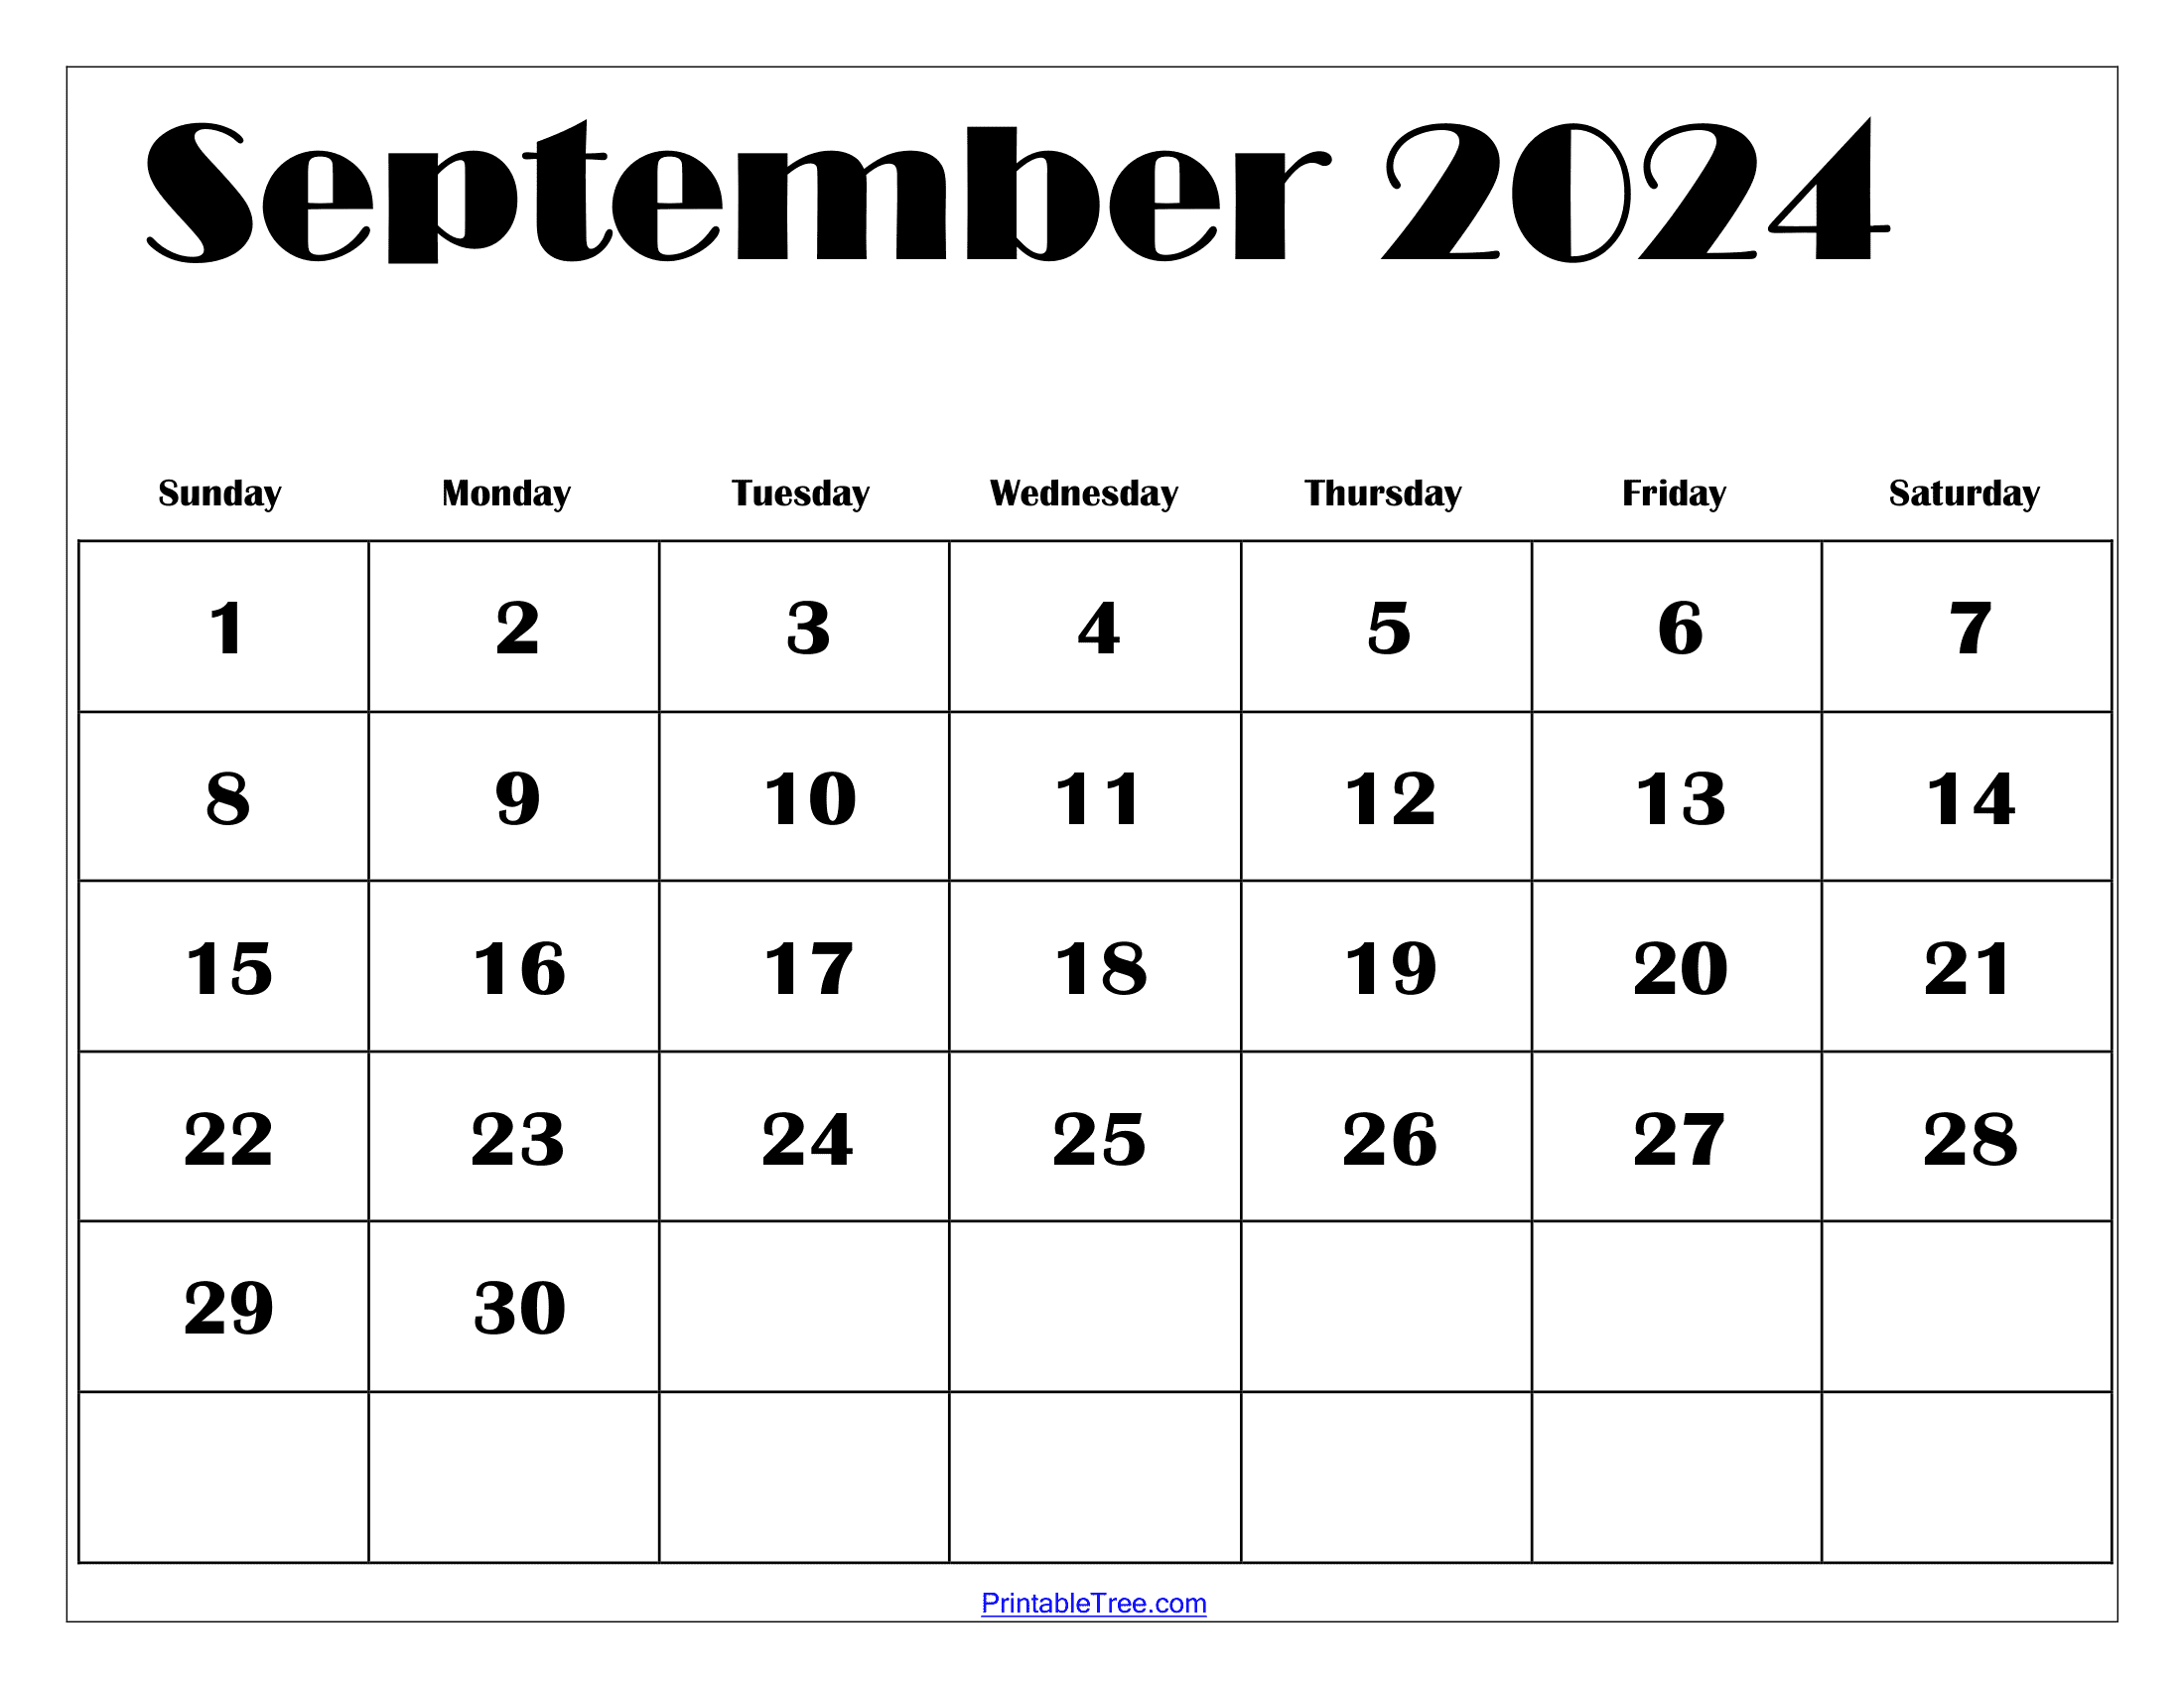 September 2024 Calendar Printable Pdf With Holidays for August And September 2024 Calendar Printable